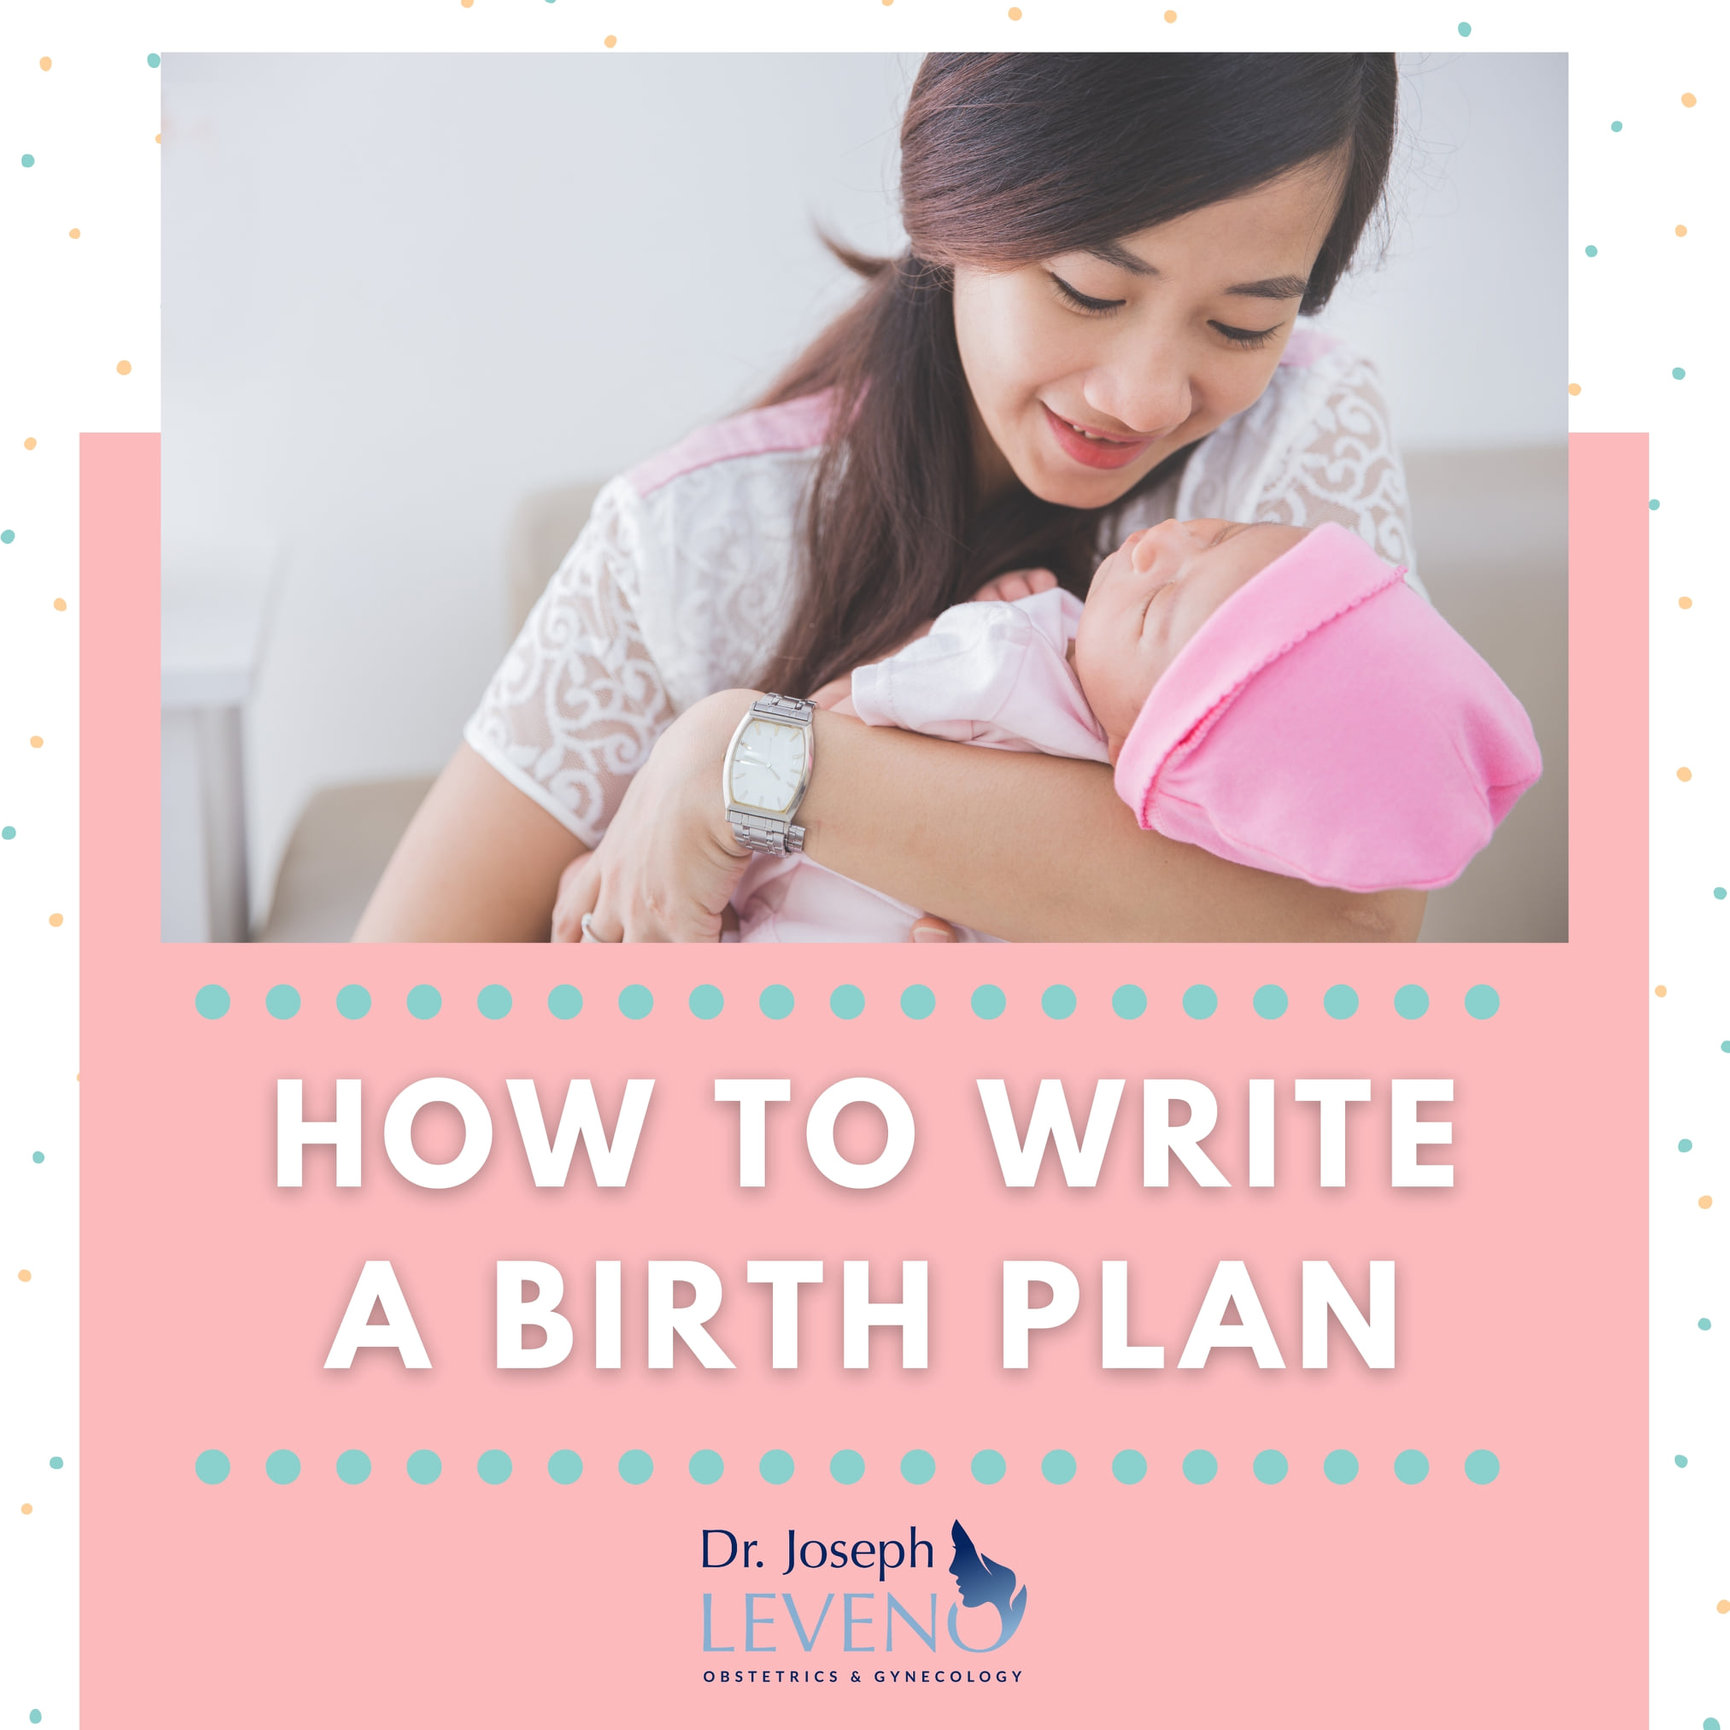 How To Write A Birth Plan - Dr. Joseph Leveno